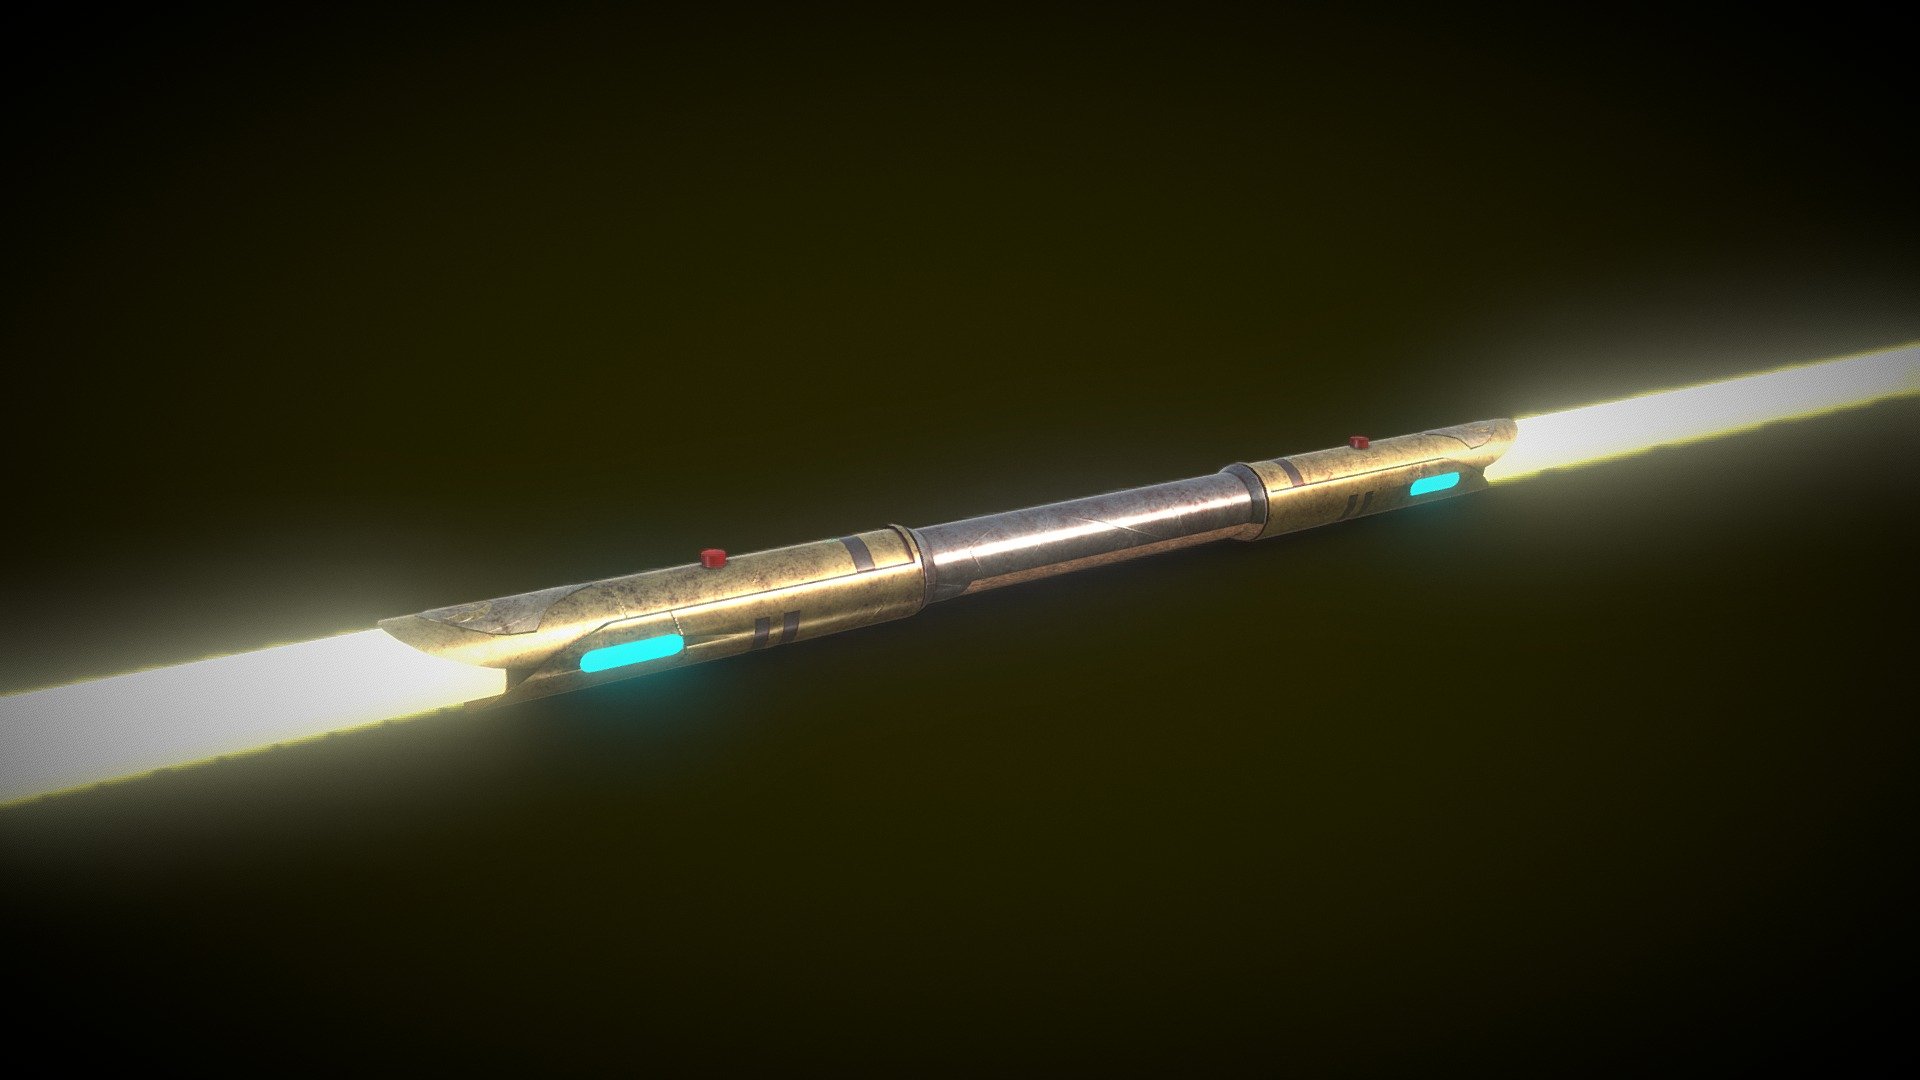 Jedi Temple Guard Lightsaber Pike model by Josh Nicholson [578c680]